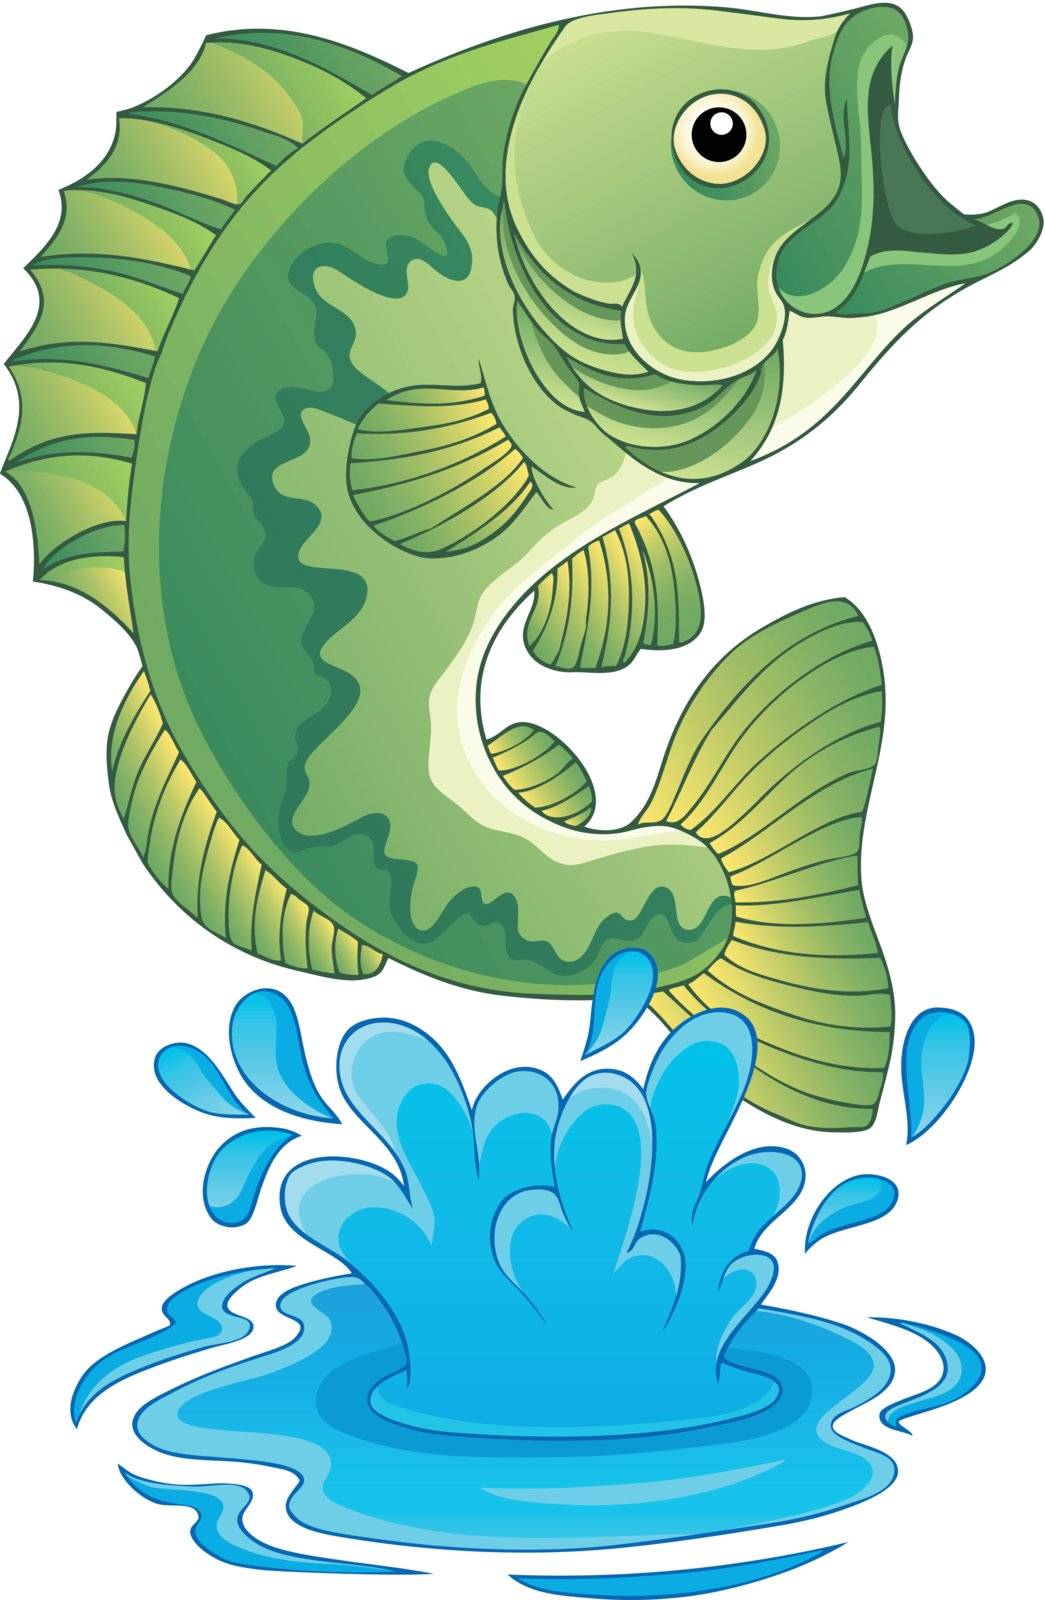 Freshwater fish theme image 6 - vector illustration.